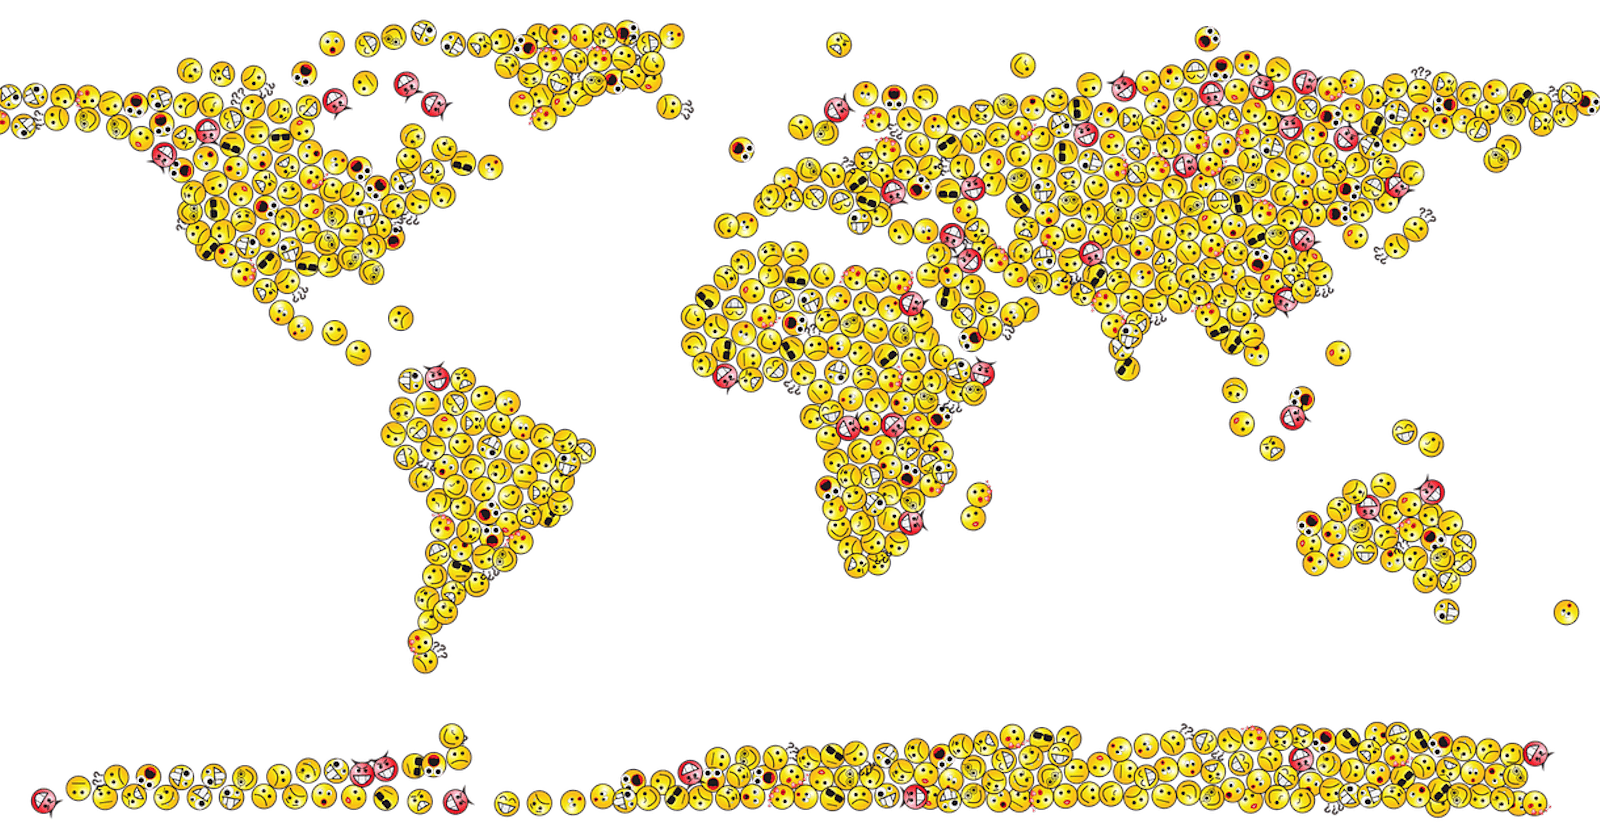 The Emoji World #1